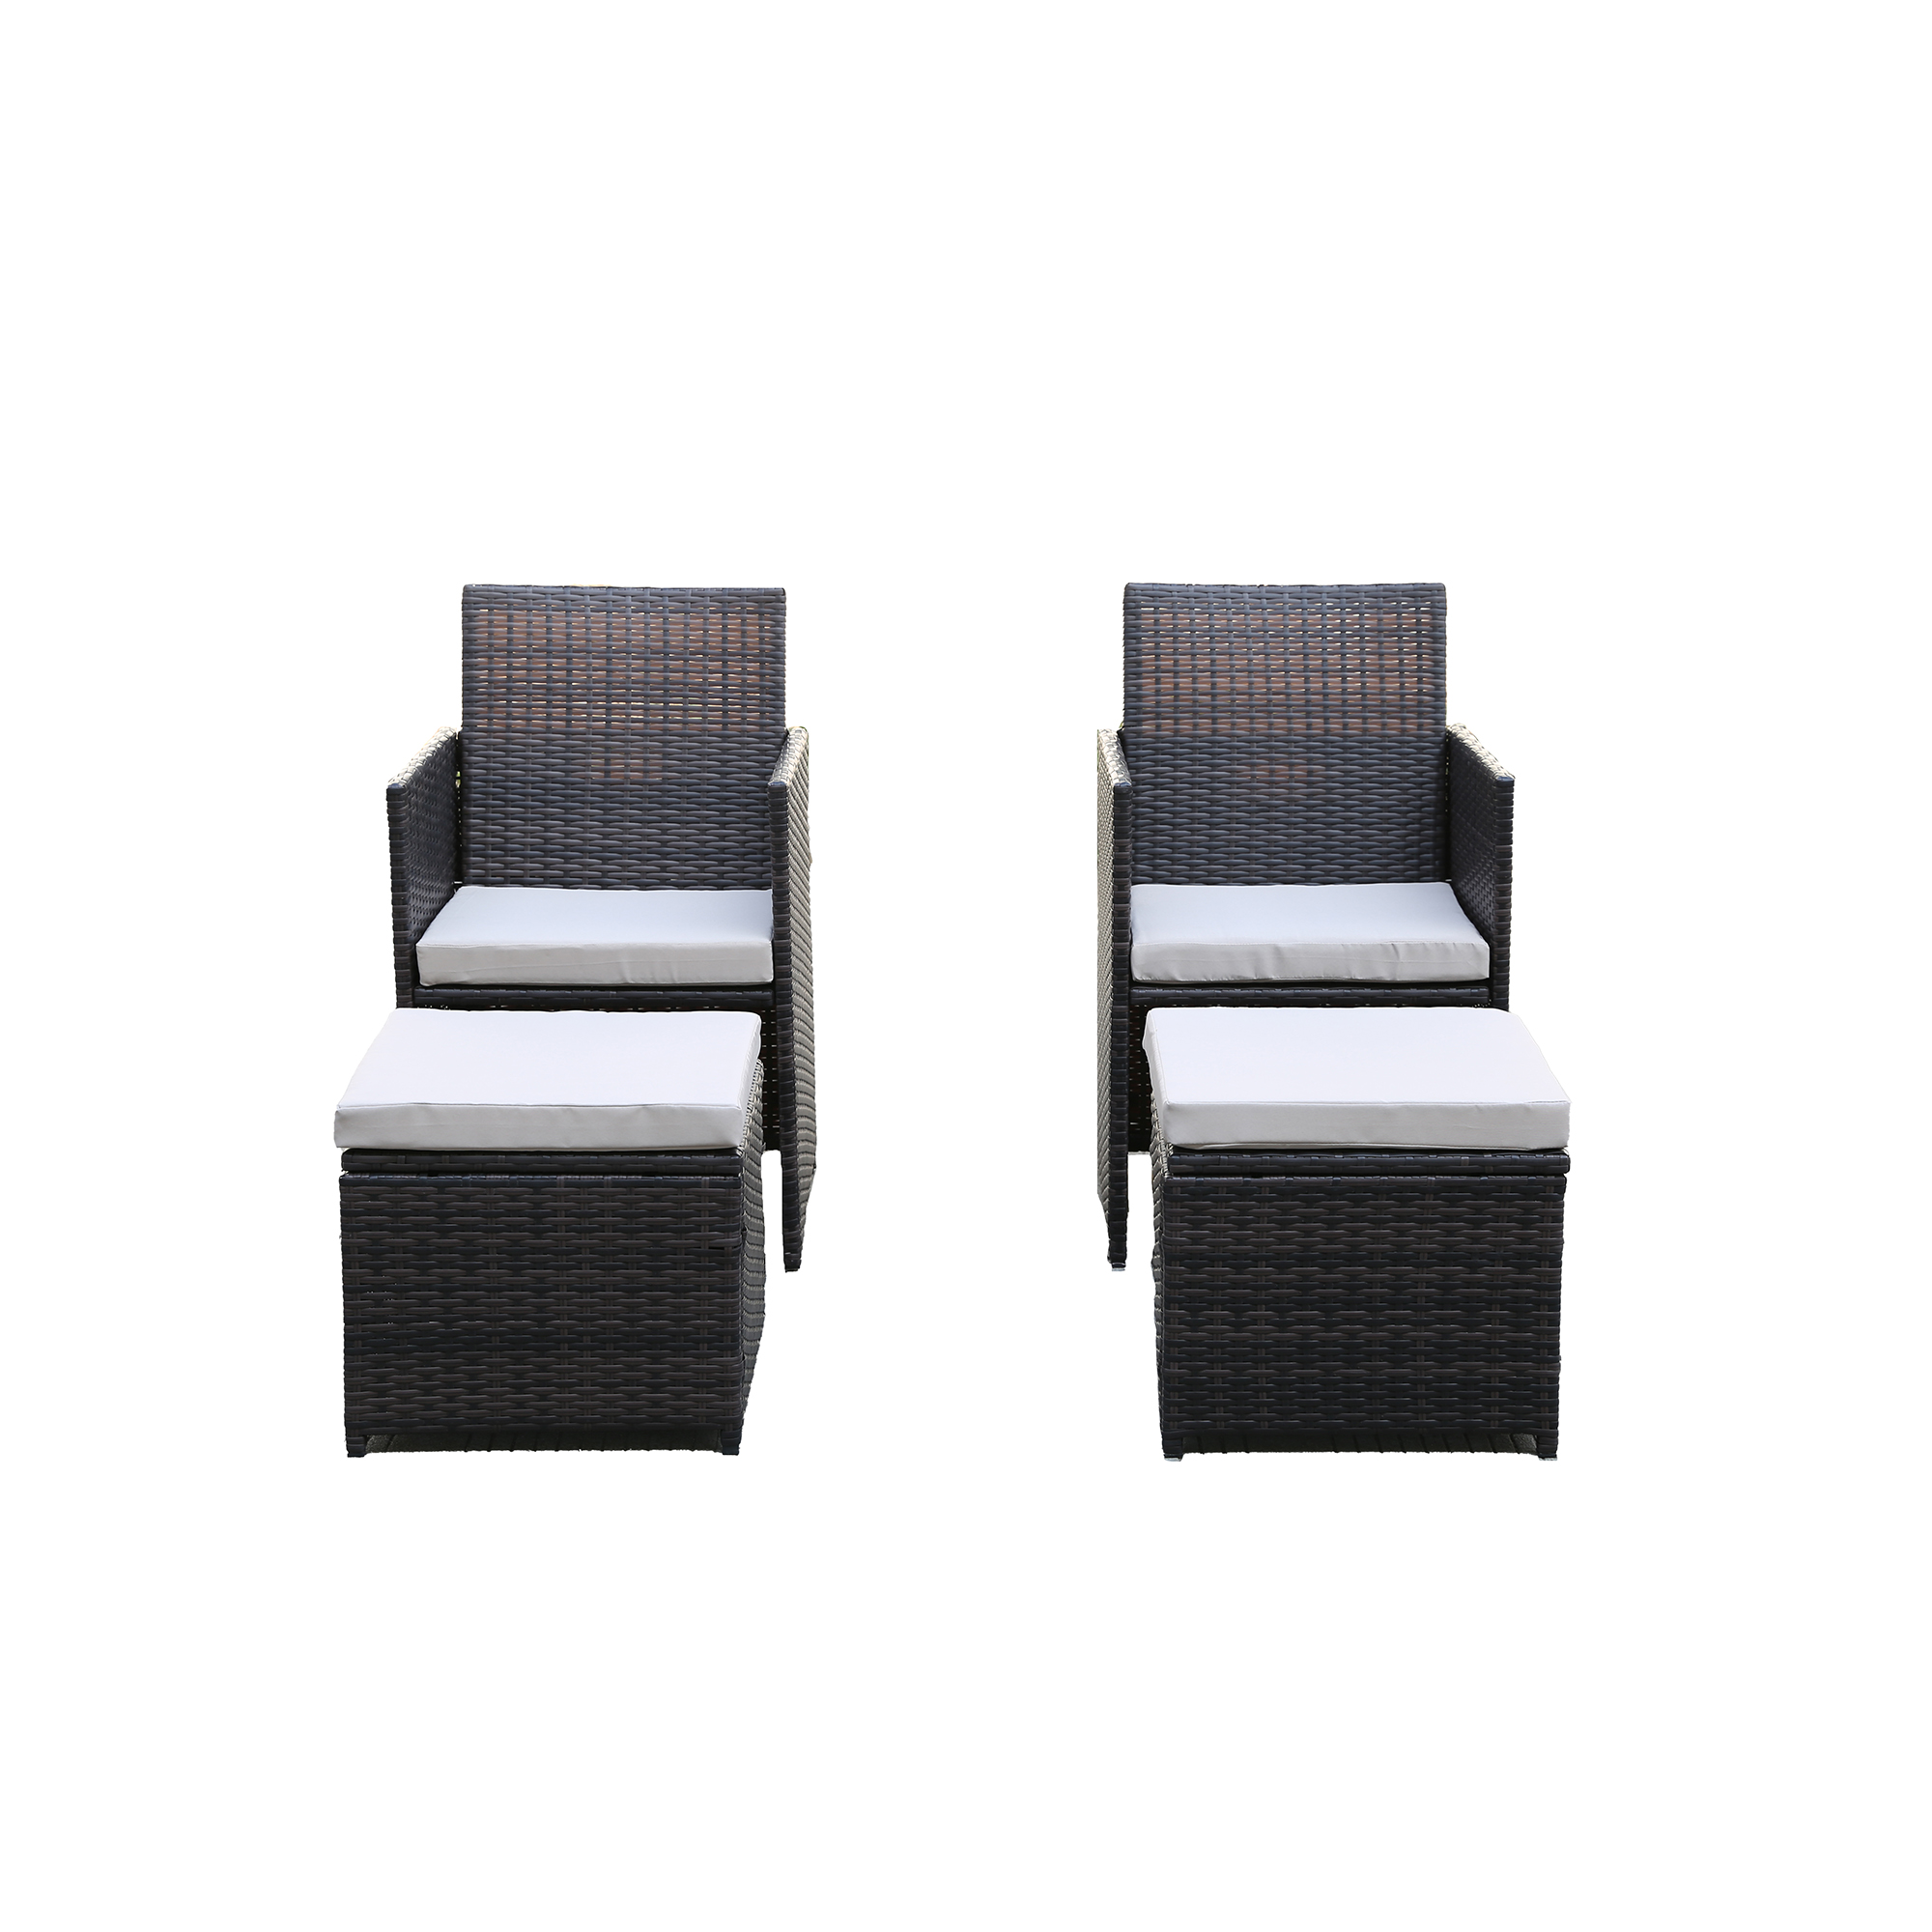 Casainc 4pcs Outdoor Rattan arm chair with Ottaman-CASAINC